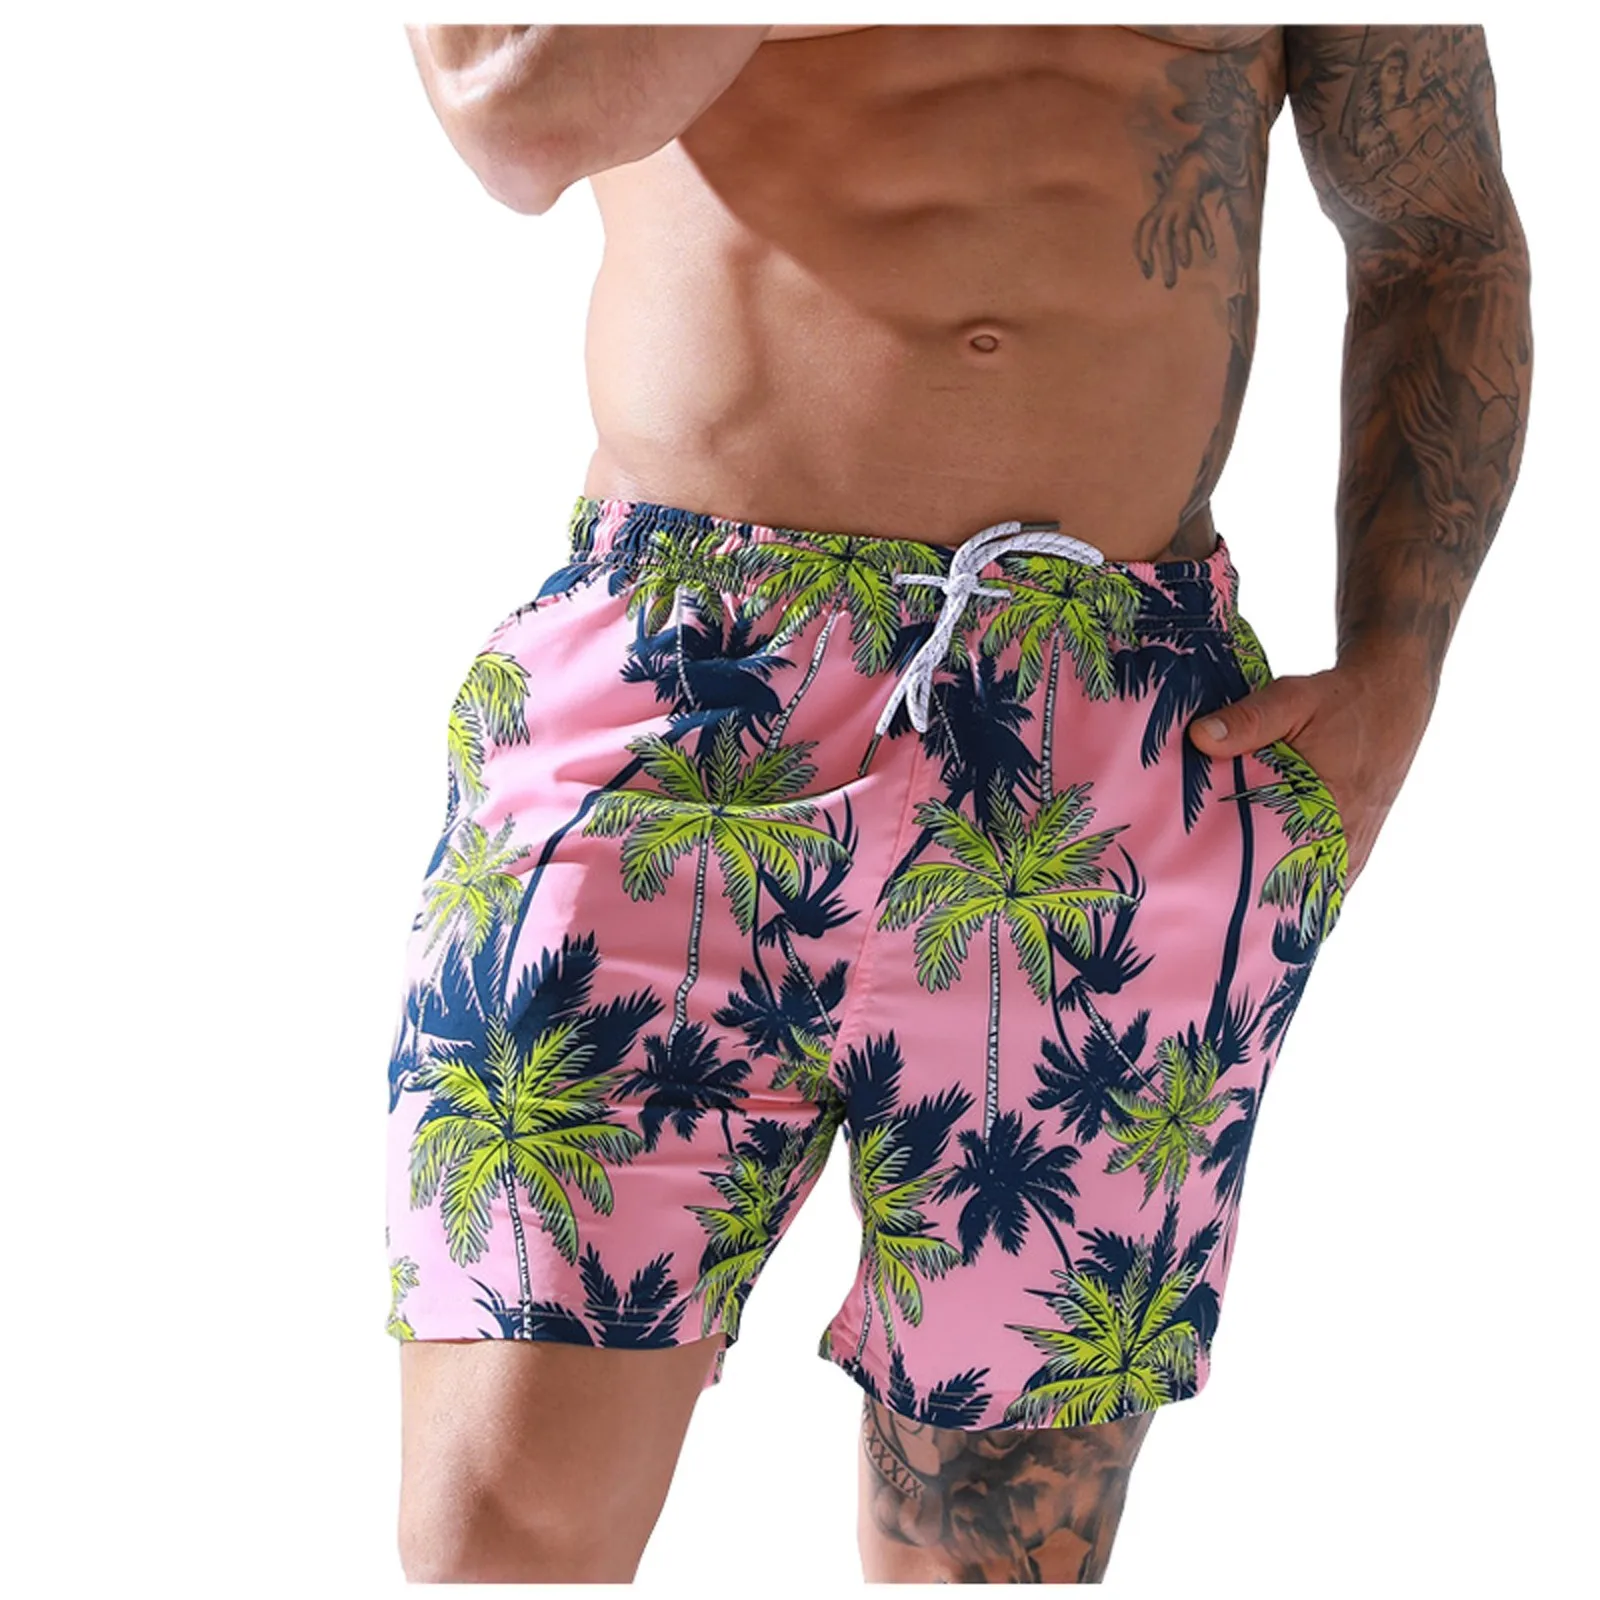 37℃ 1-5Y Baby Boys Dinosaur Trunks Quick Dry Board Shorts Swimwear Bathing Suit Summer Holiday Beach Wear Clothes 